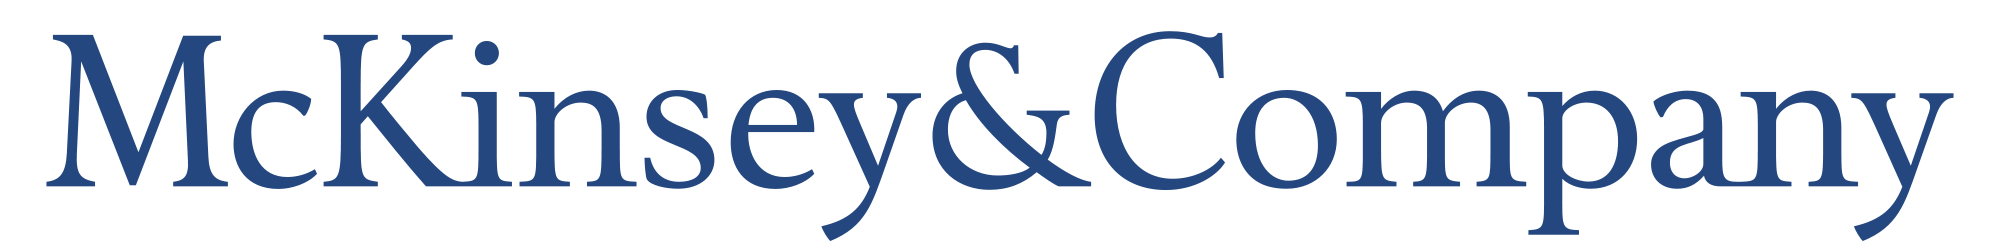 2000px mckinsey and company logo 1.svg